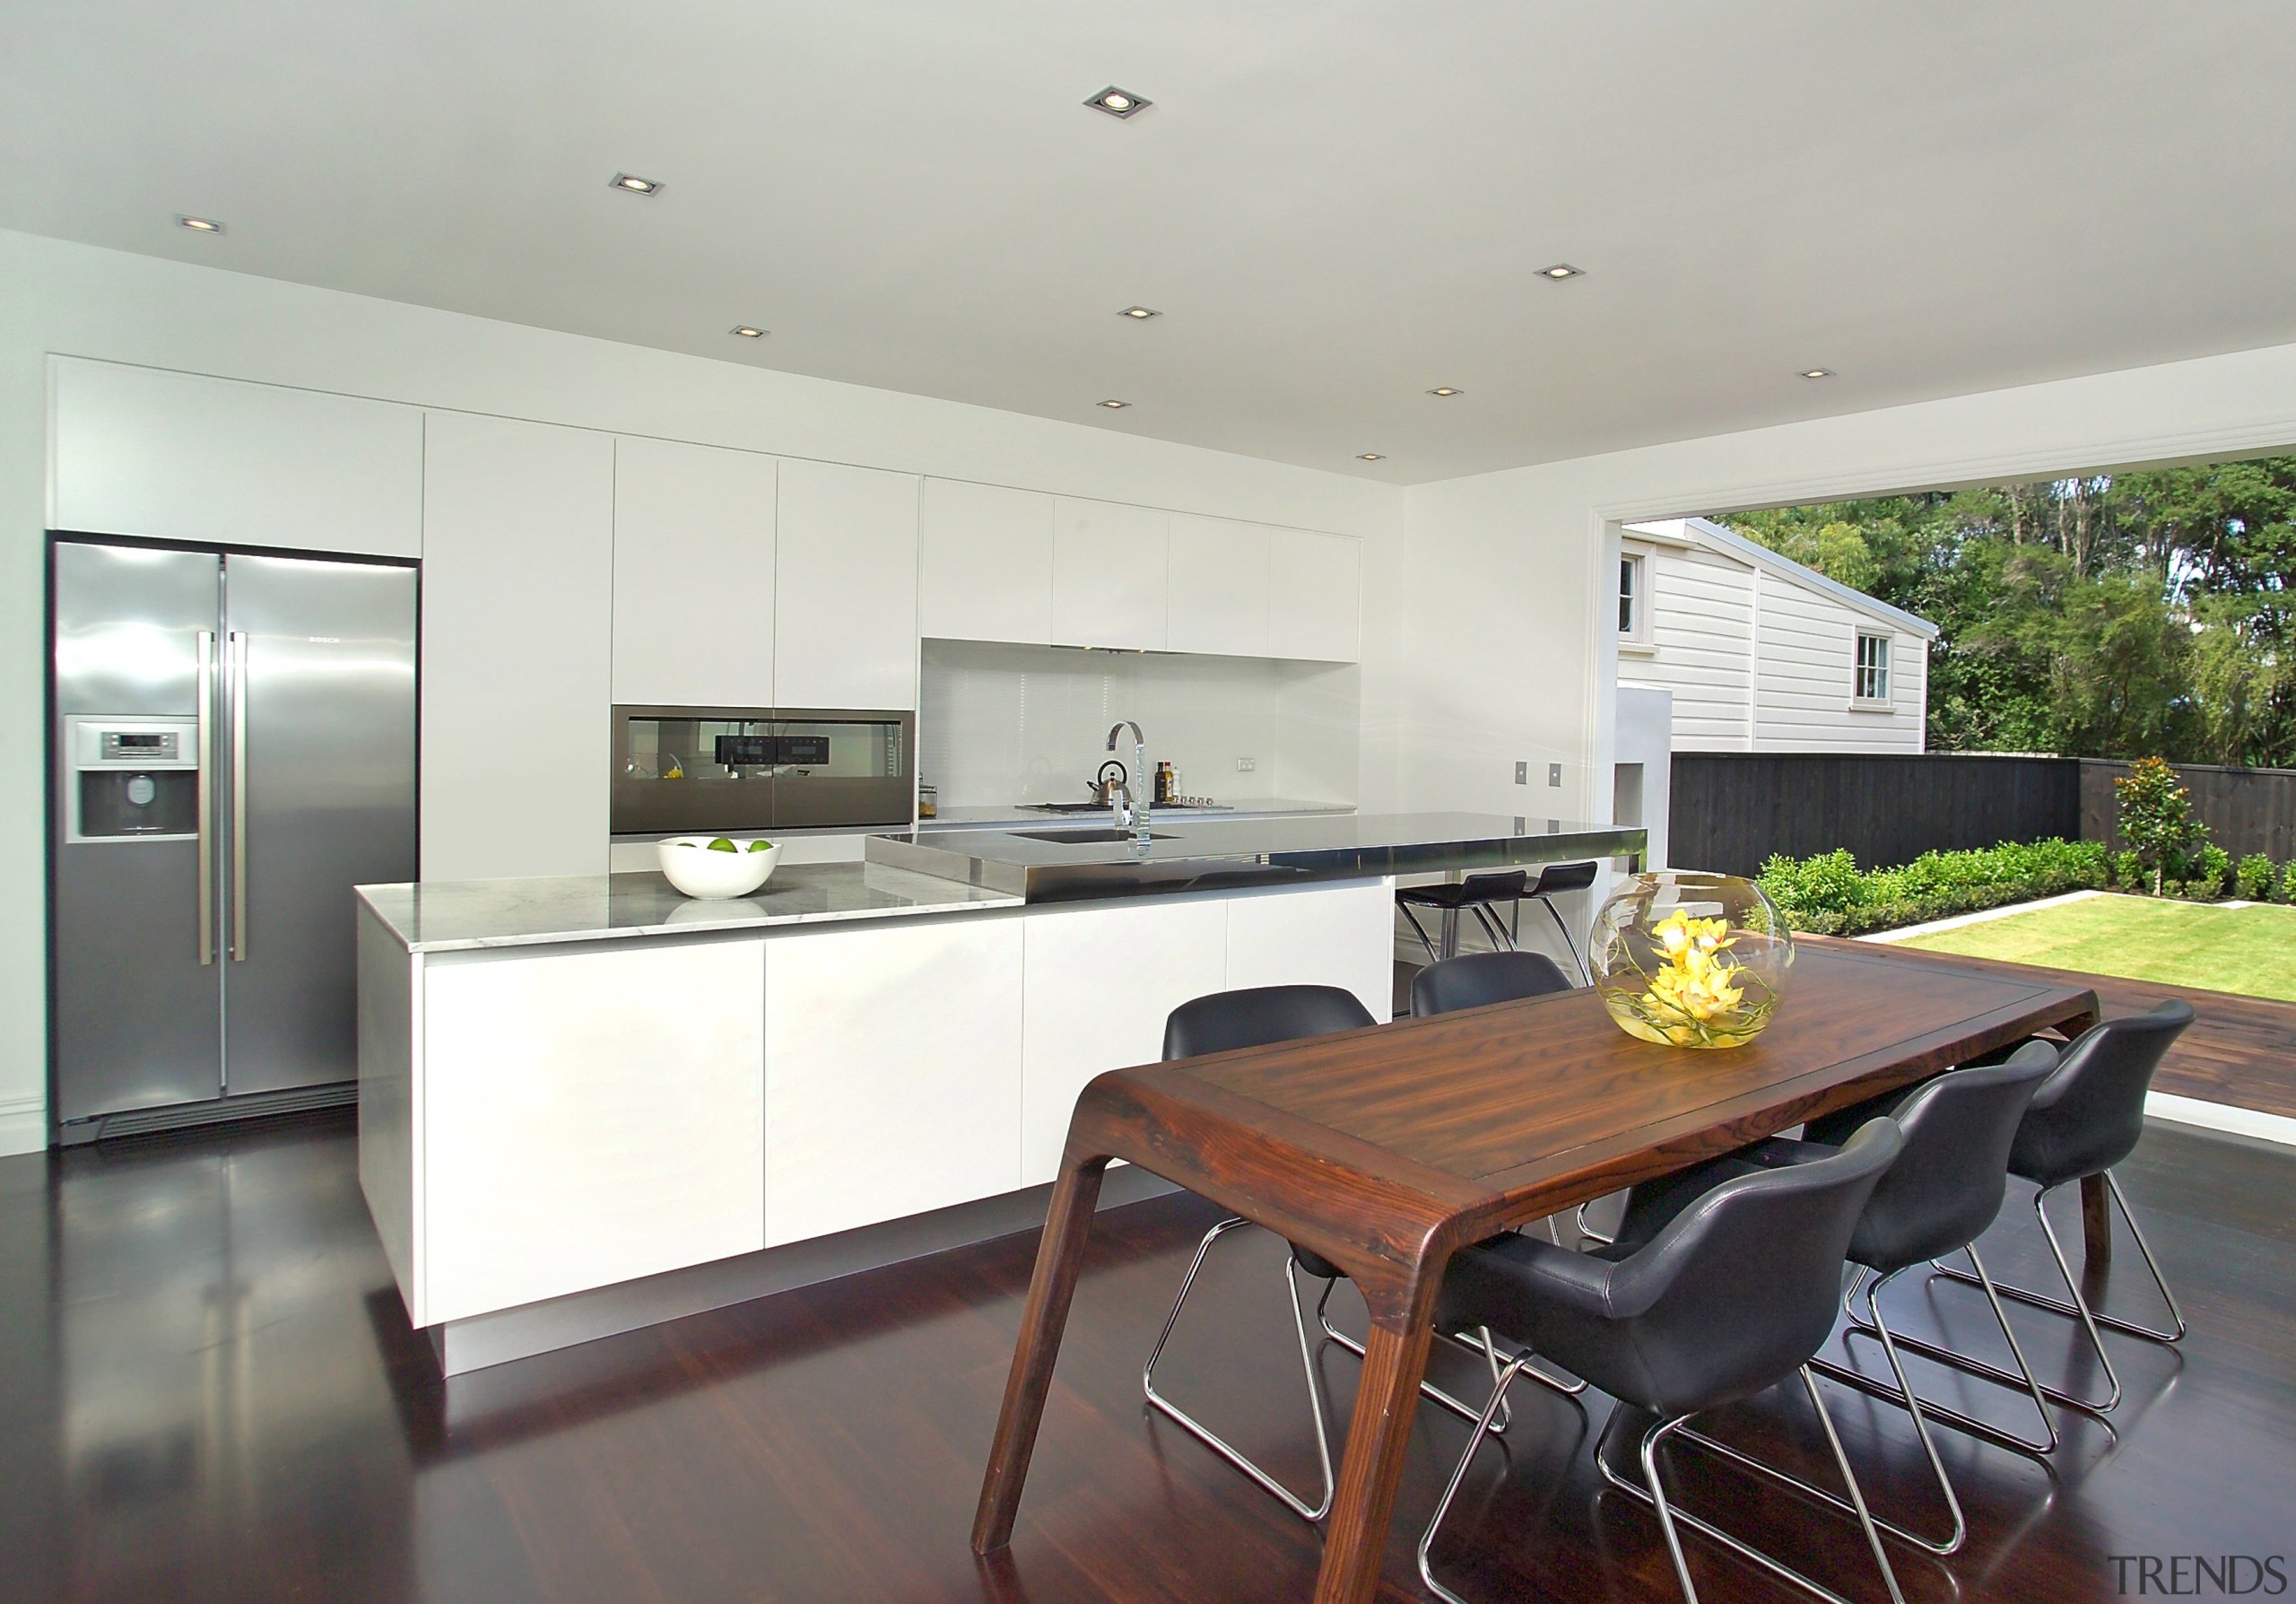 View of a kitchen designed by NKBA designer countertop, house, interior design, kitchen, property, real estate, white, gray